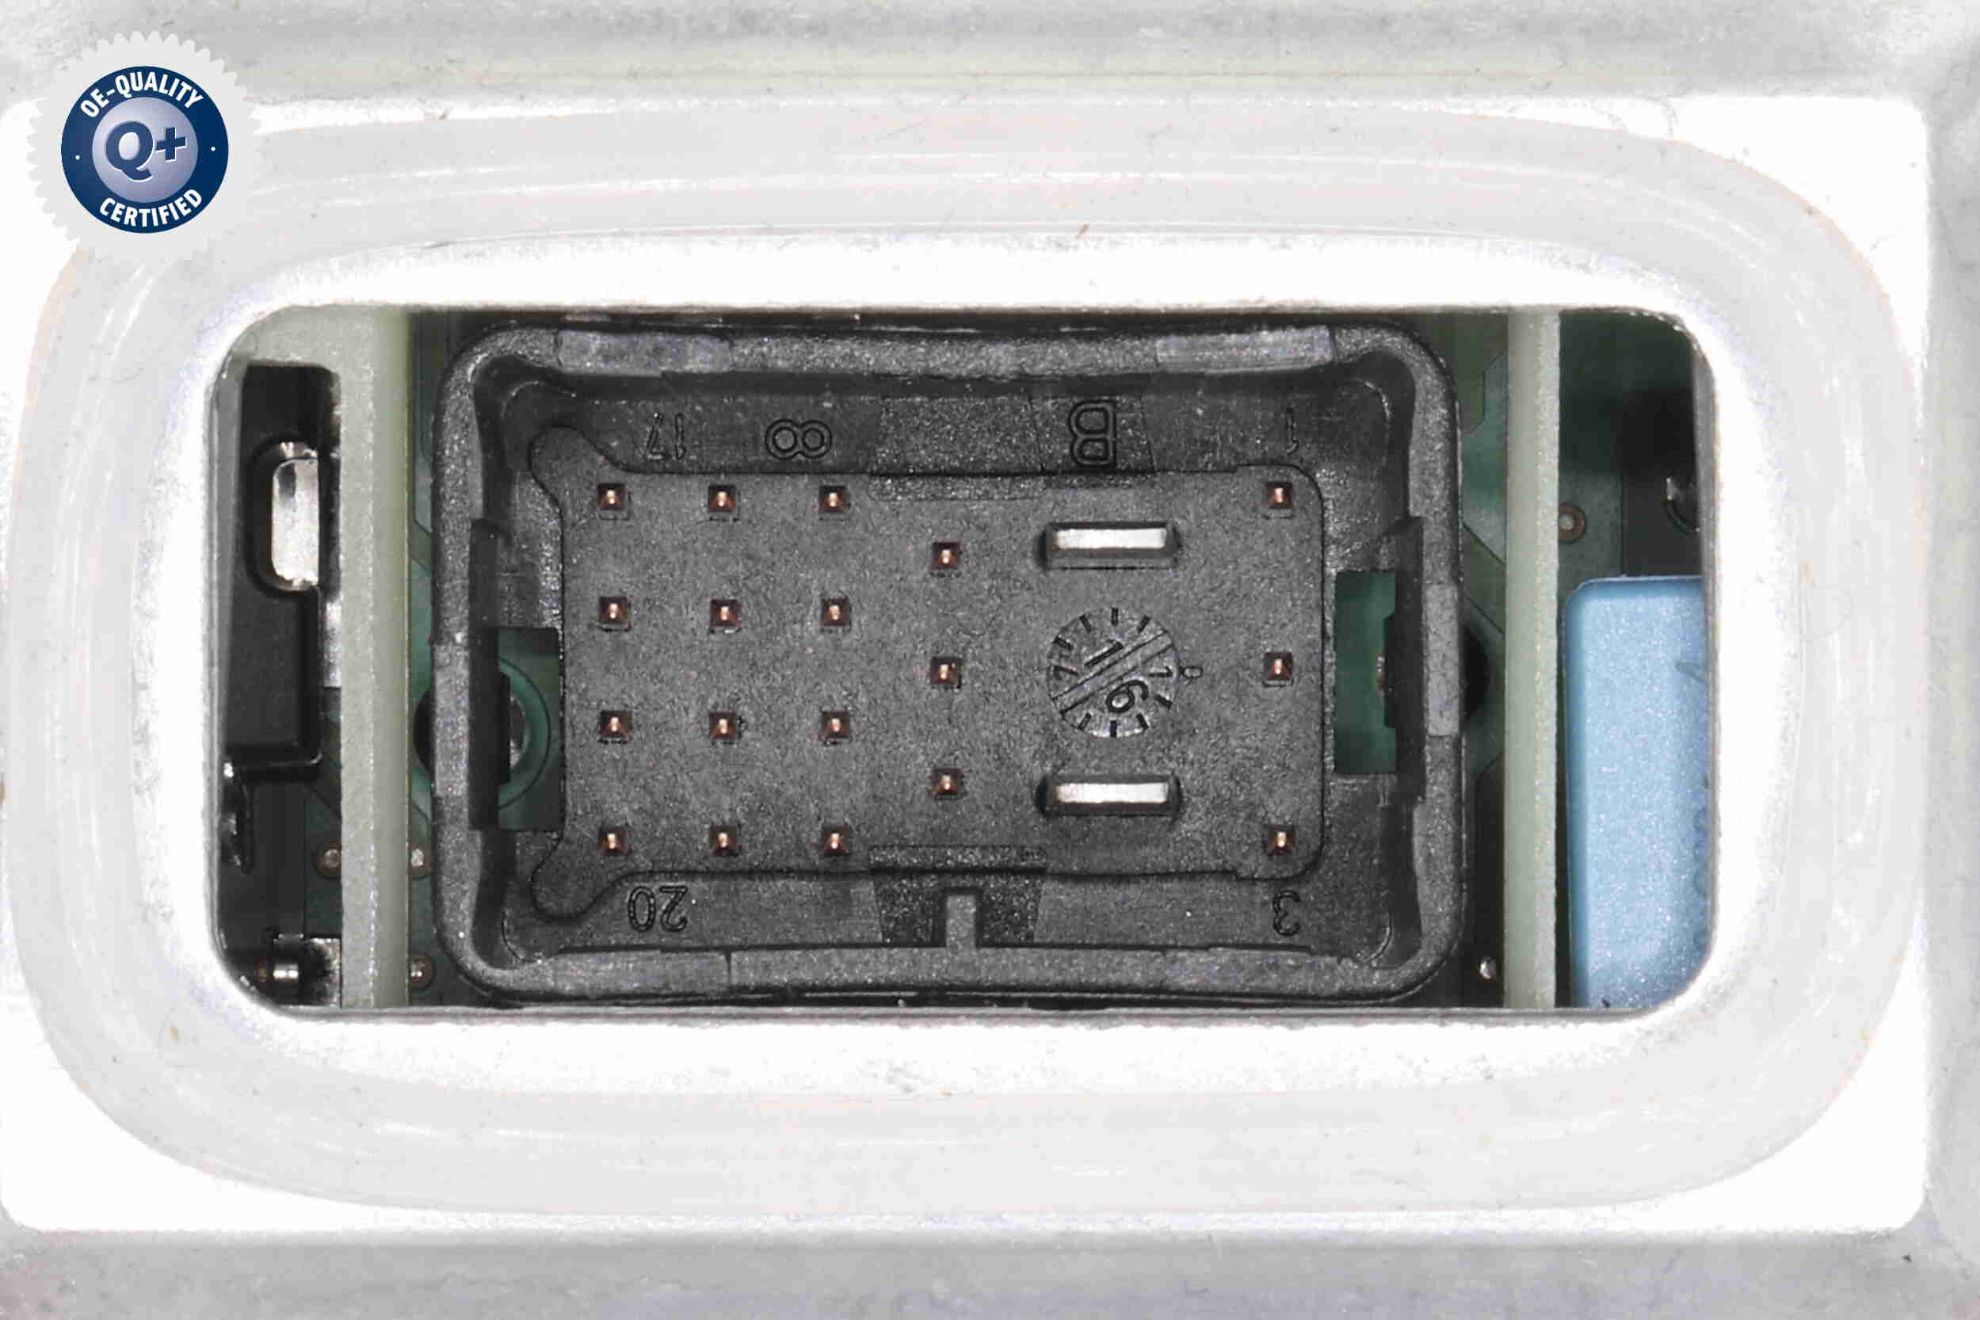 Obrázok Snímač uhlu natočenia volantu VEMO Q+, original equipment manufacturer quality V30720750